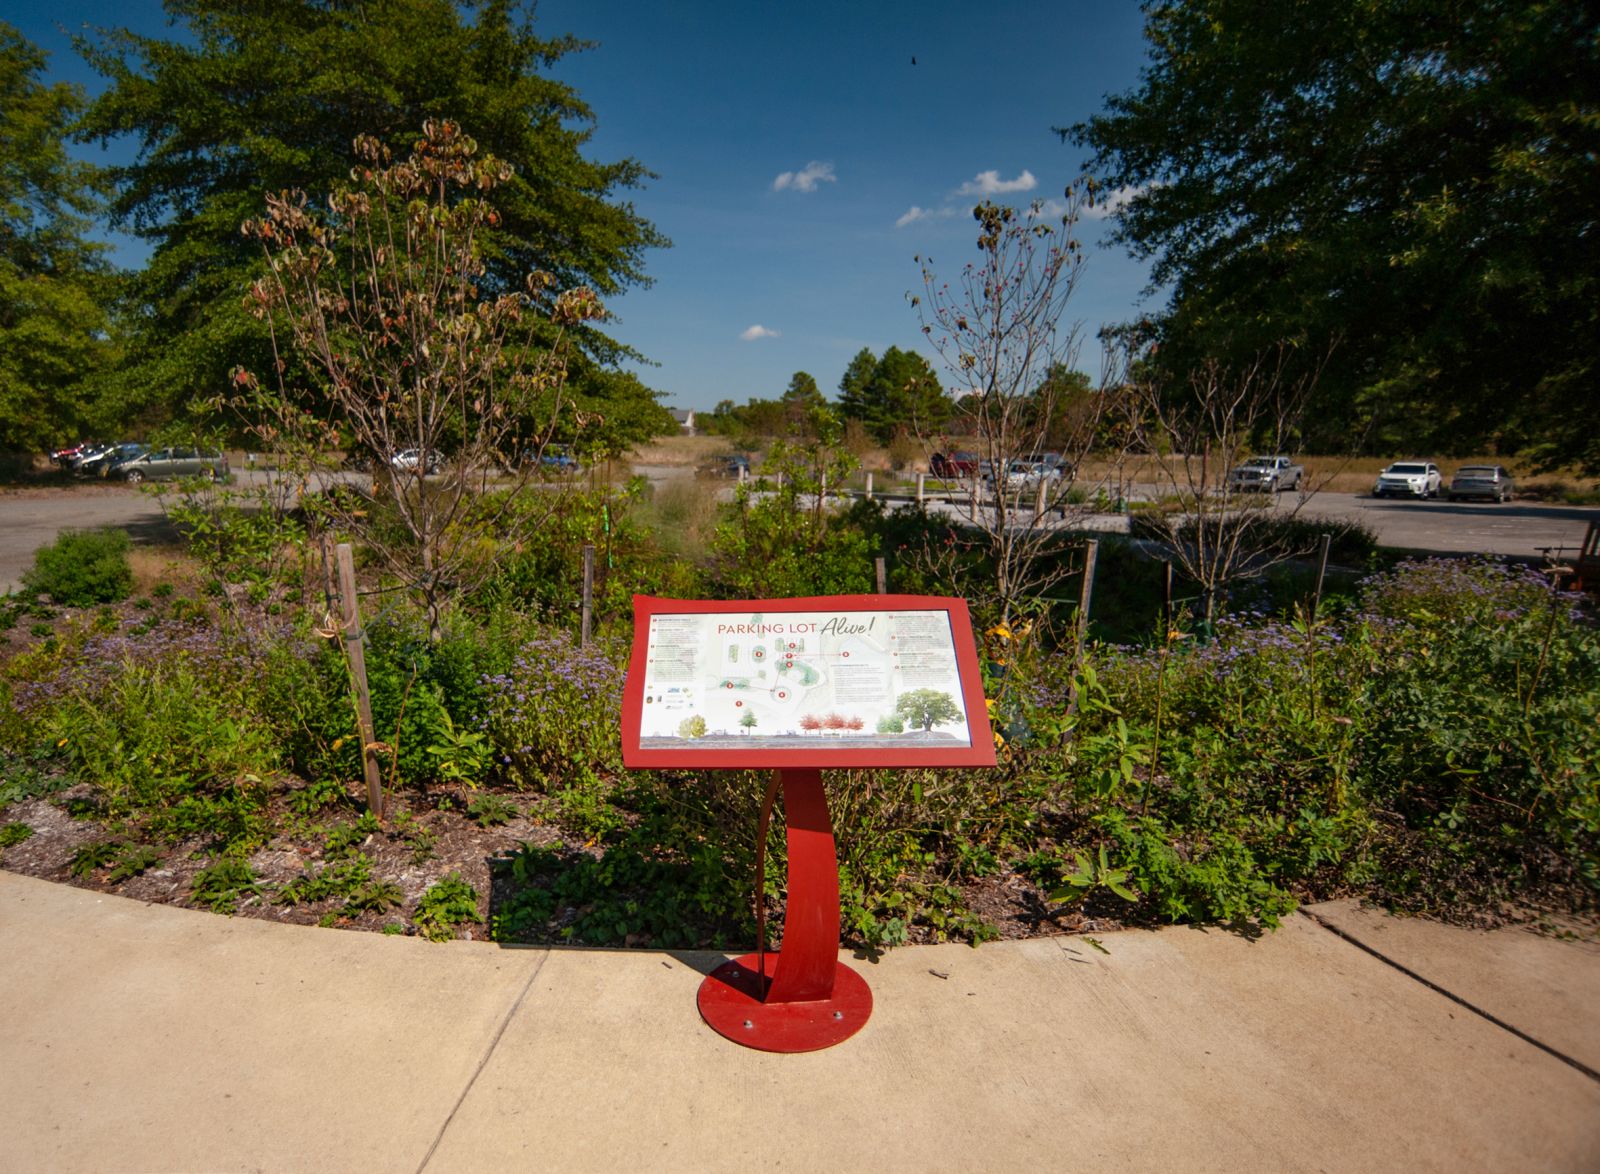 Garden and plaque